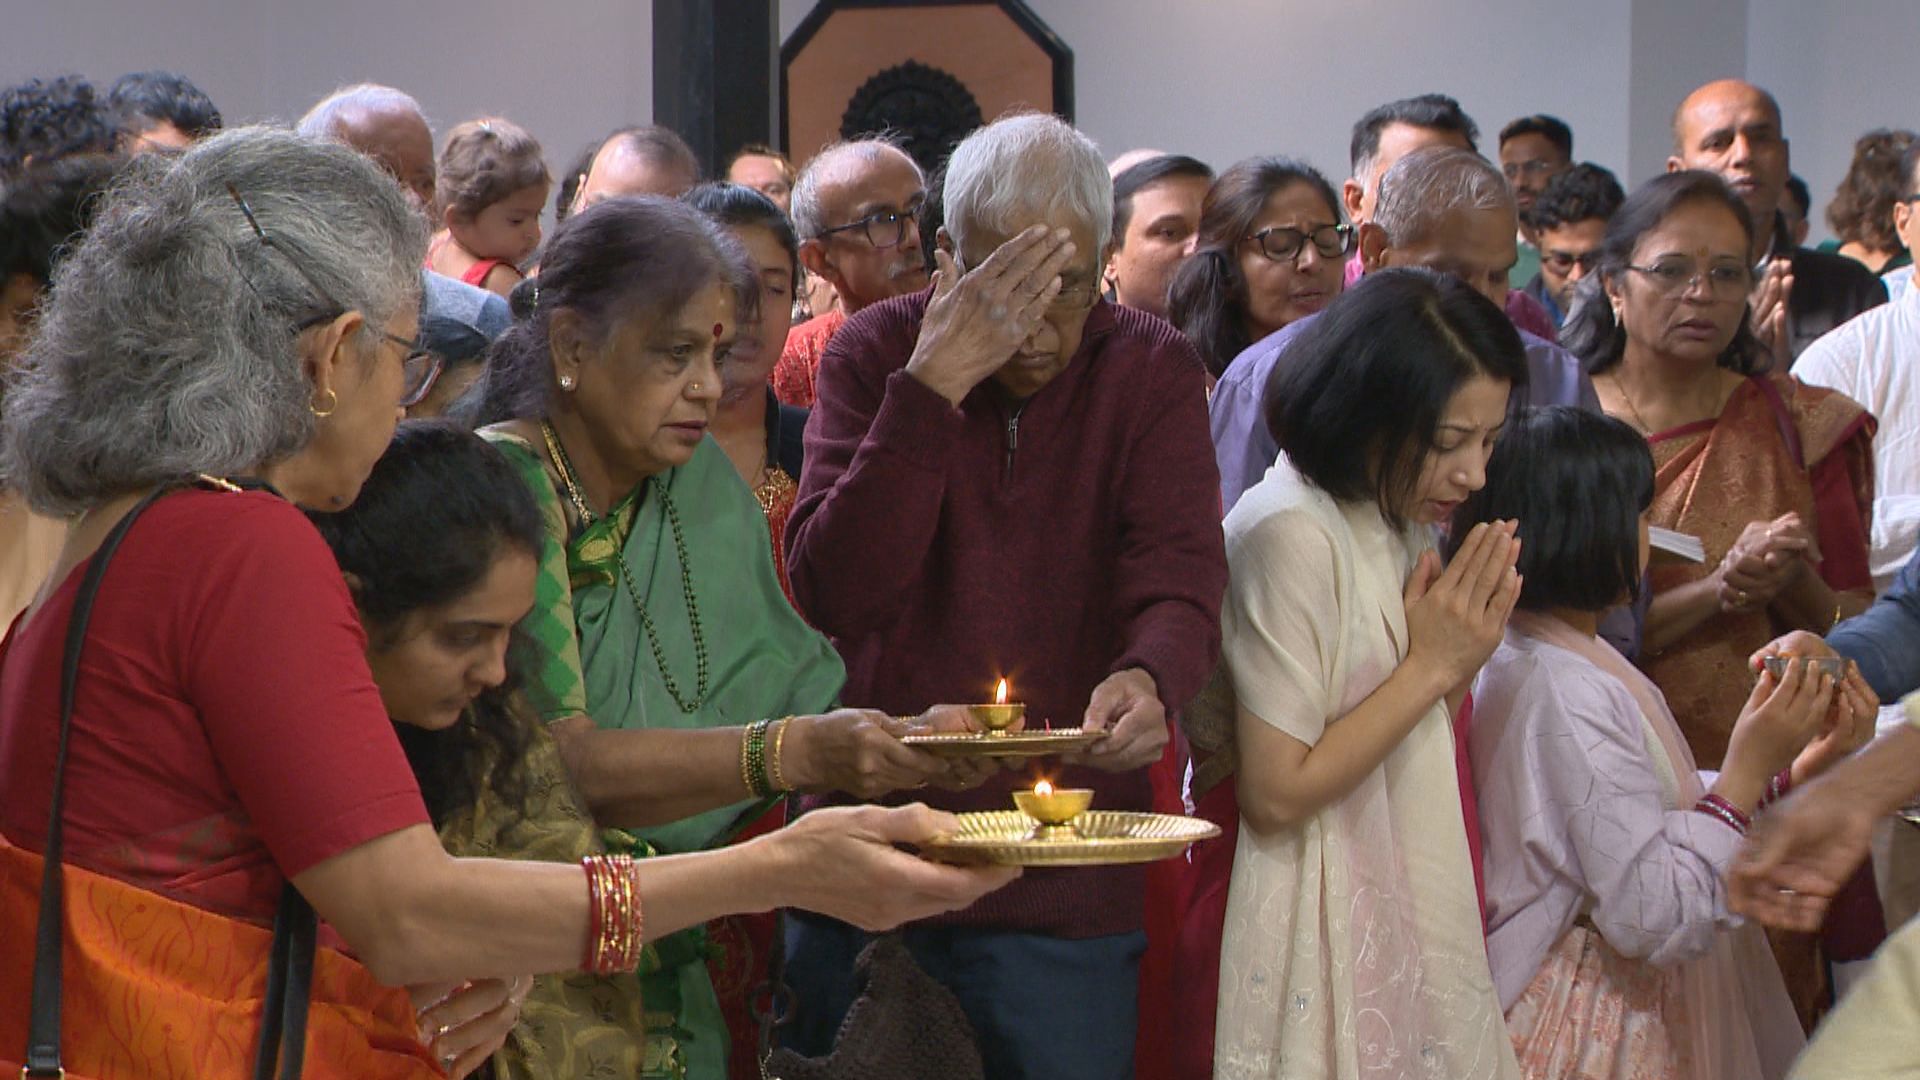 Saskatoon celebrates Diwali: a day of prayer, community and celebration